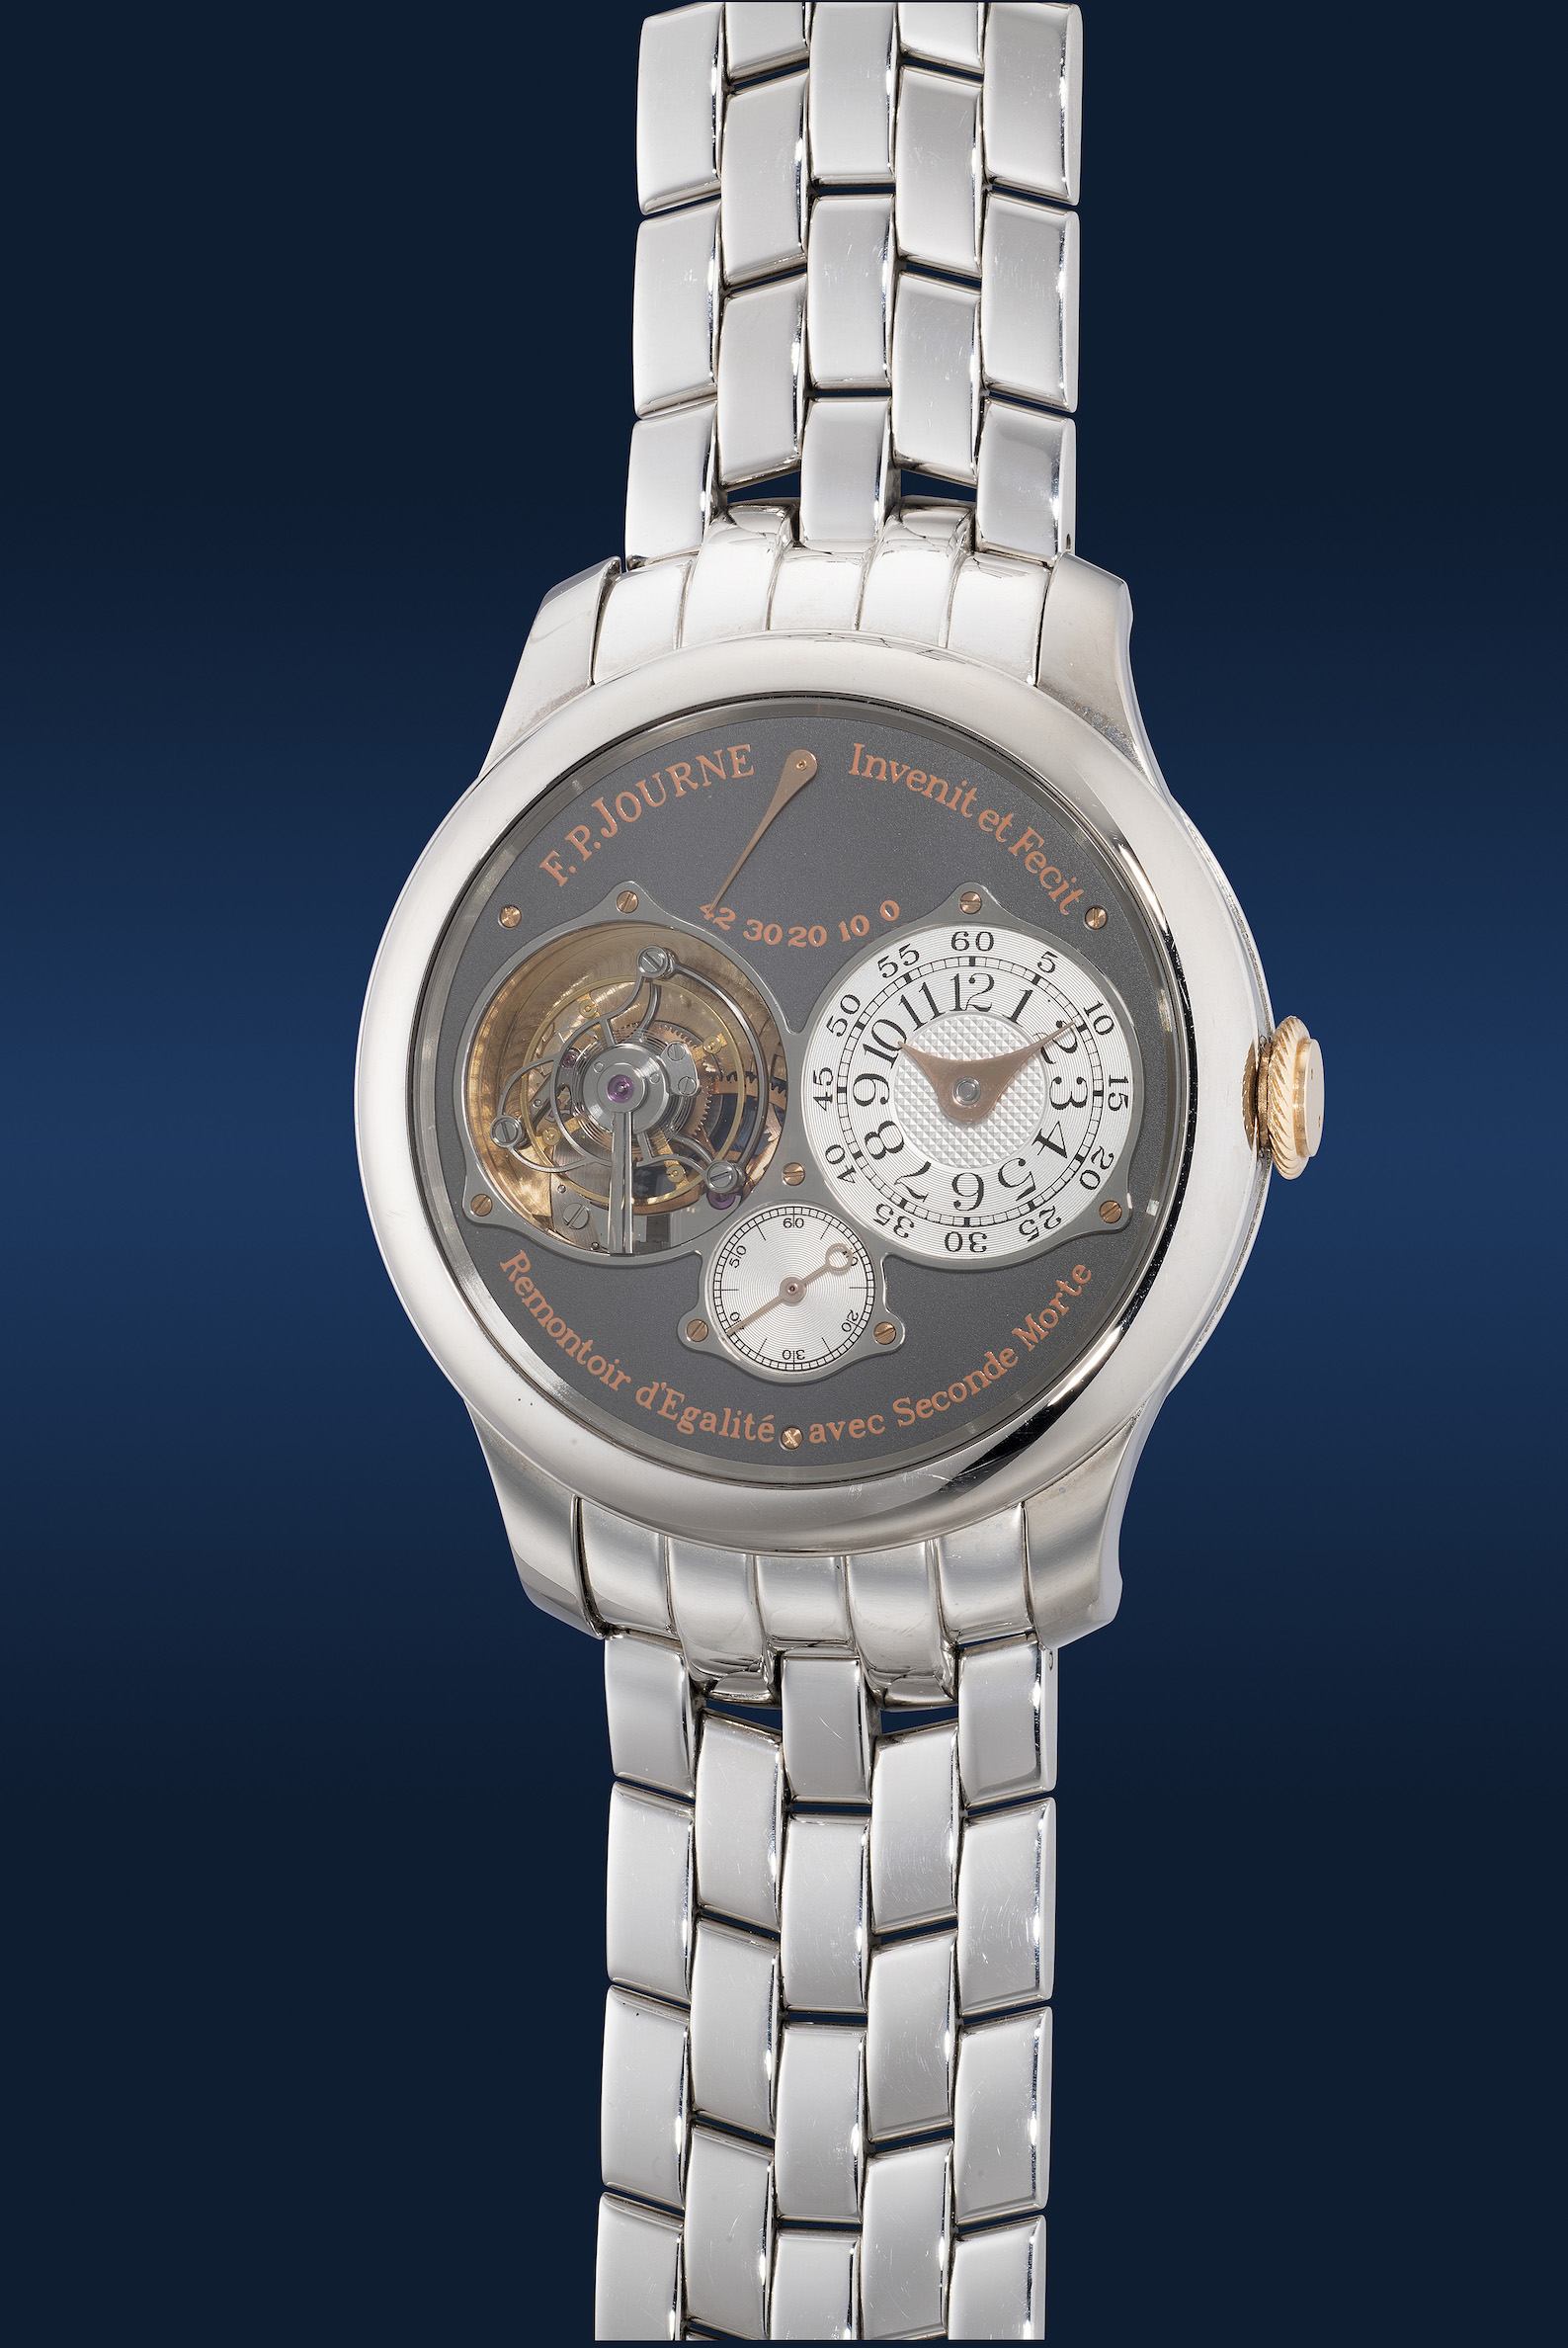 1005 F.P. Journe limited edition titanium and pink gold tourbillon wristwatch